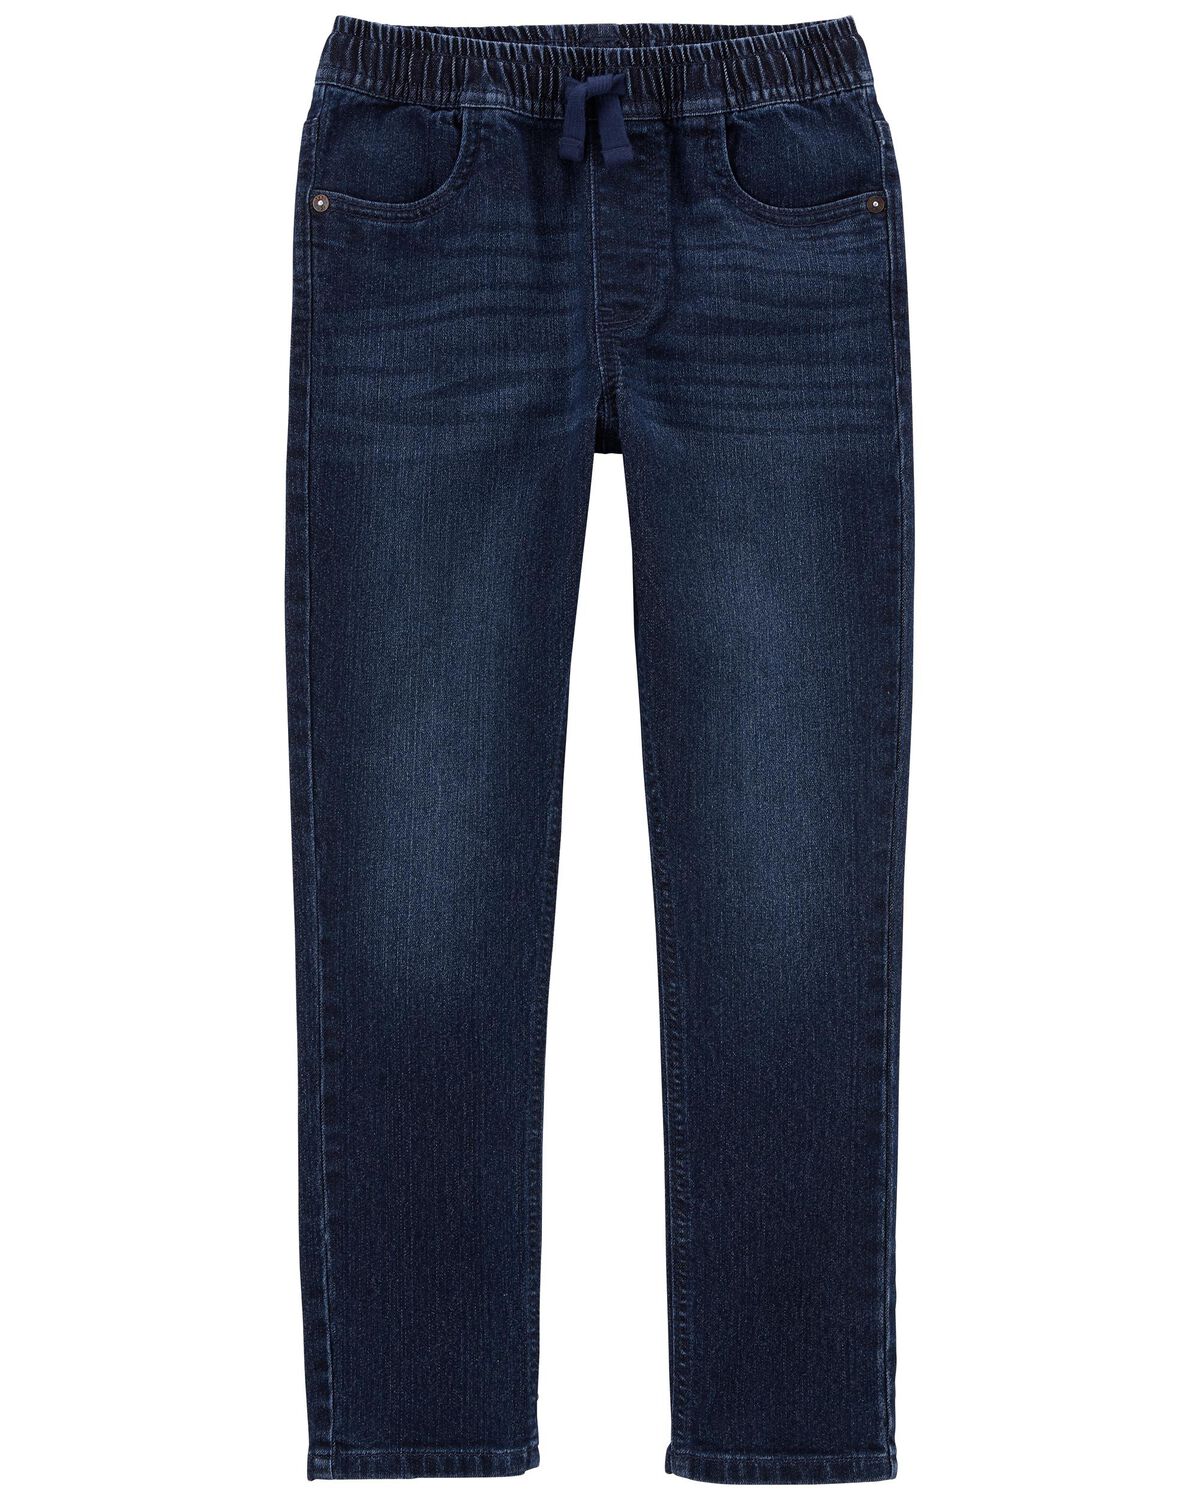 Dark Wash Kid Pull-On Jeans | carters.com